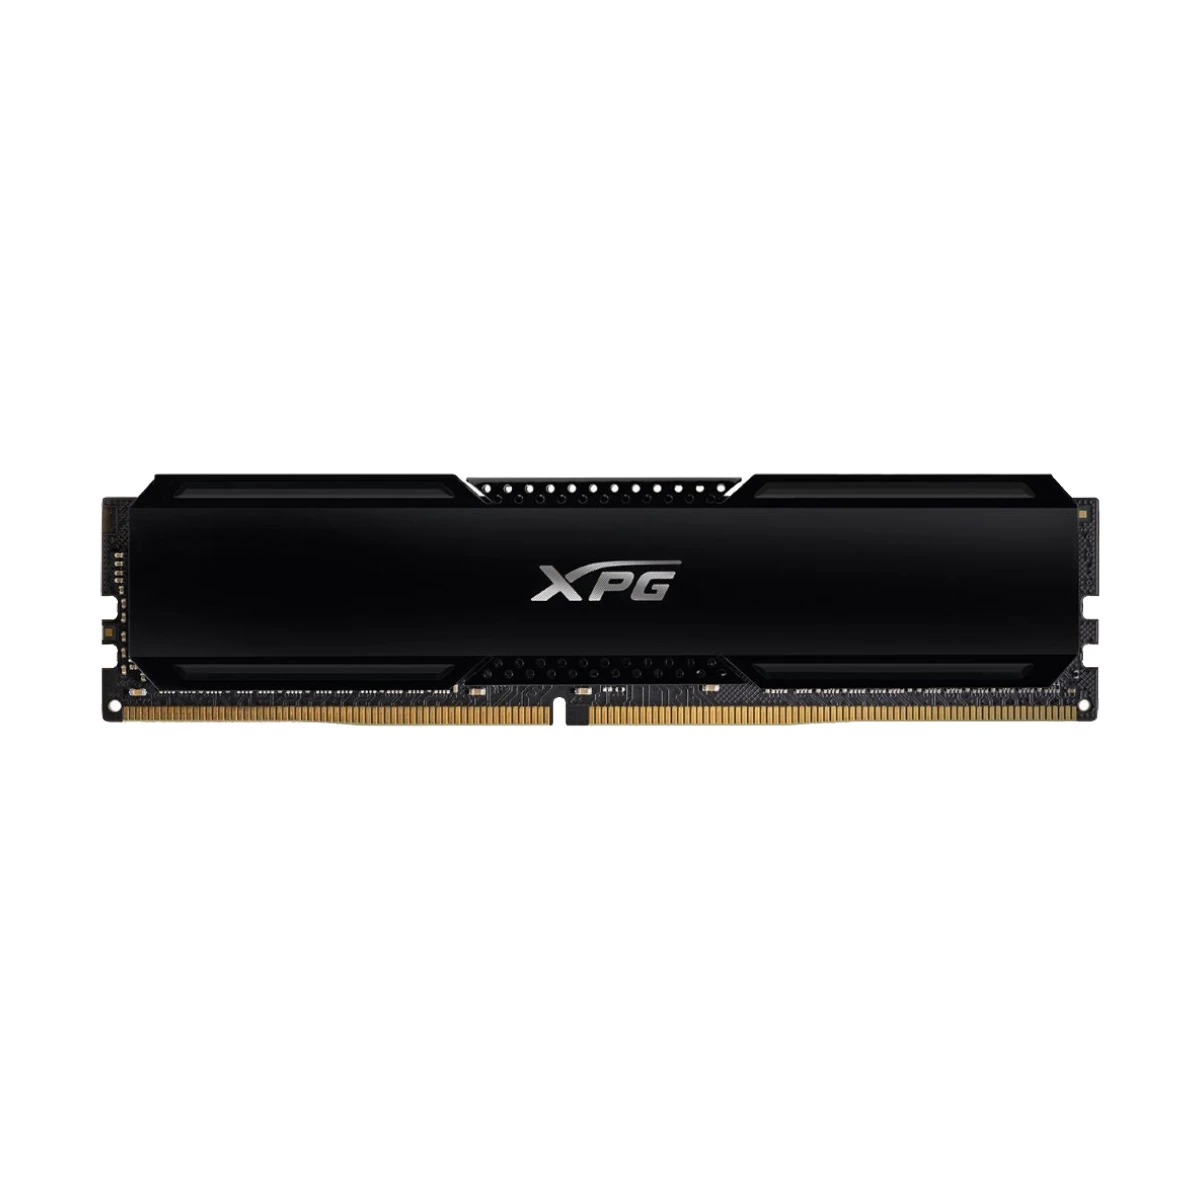 ADATA XPG Gammix D20 8GB DDR4 3200MHz Gaming Desktop RAM